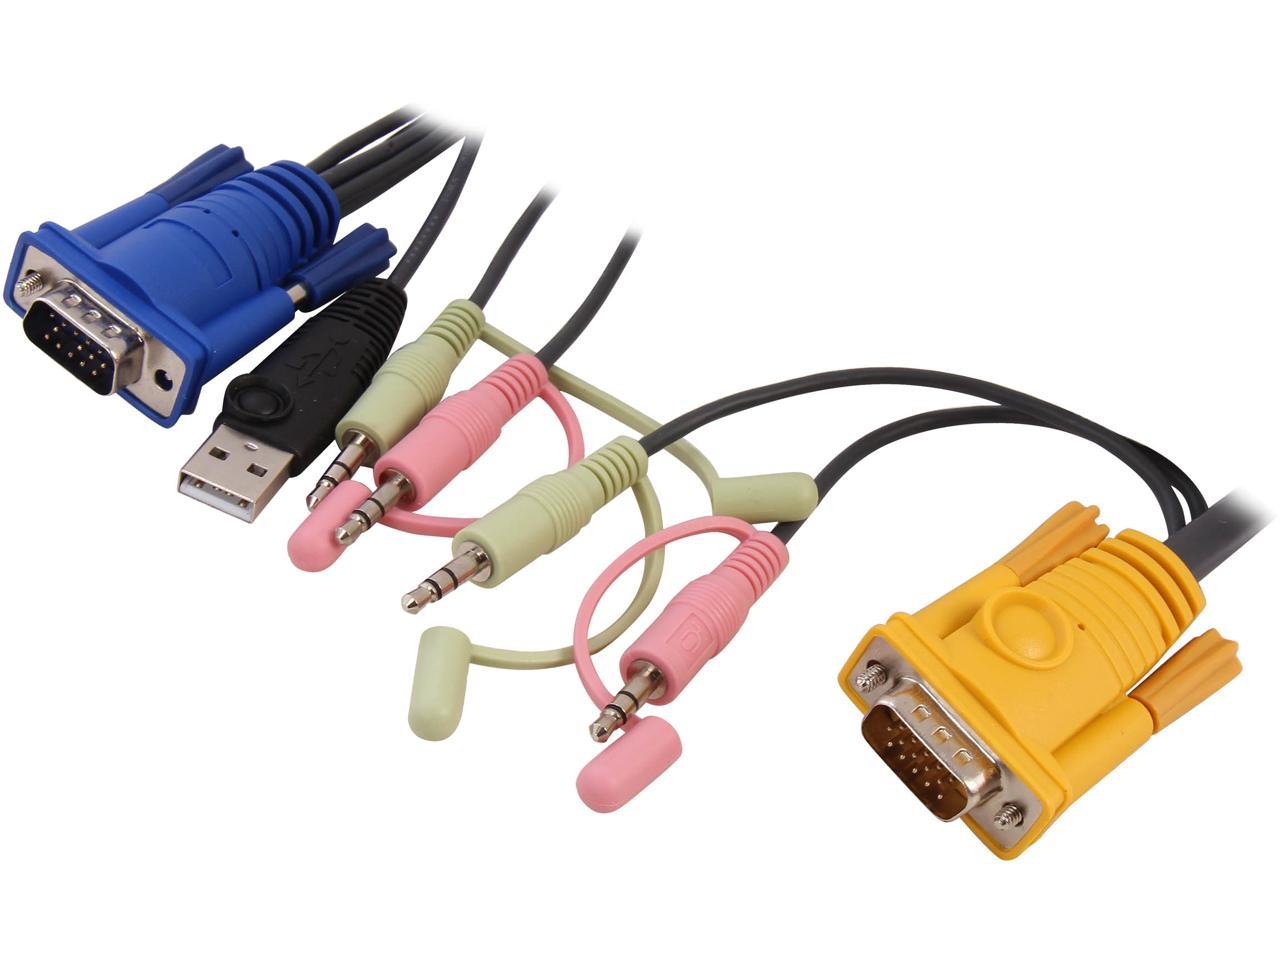 IOGEAR 6ft. 6" USB KVM Cable with Audio G2L5302U